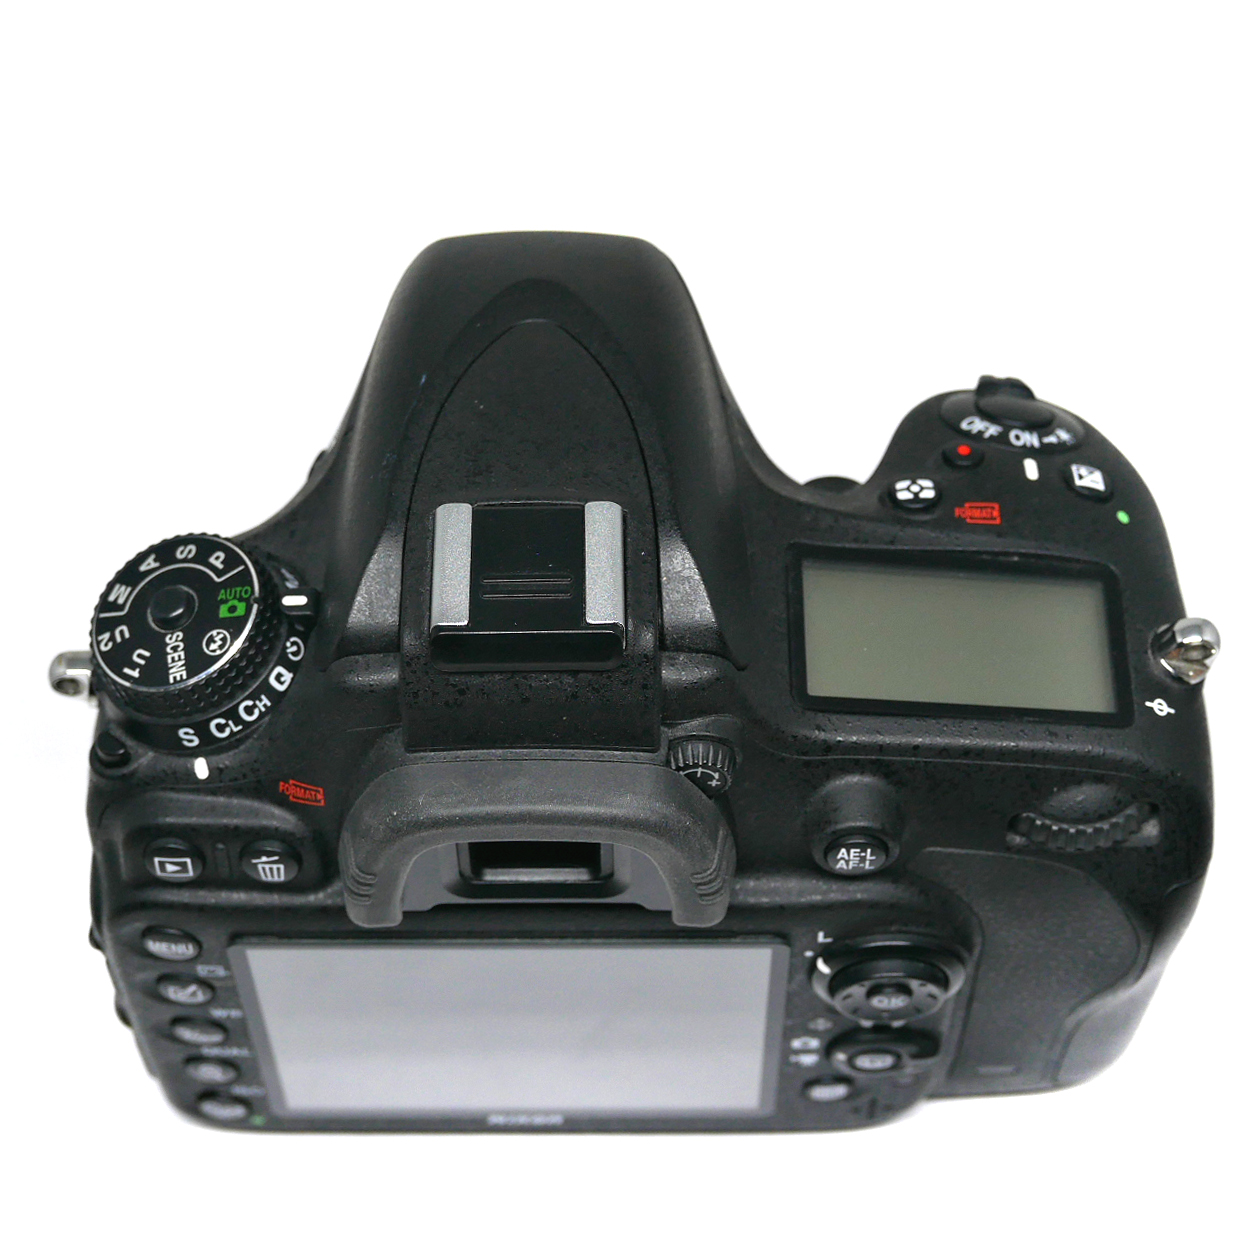 (Myyty) Nikon D600 runko (SC:5116) (käytetty)